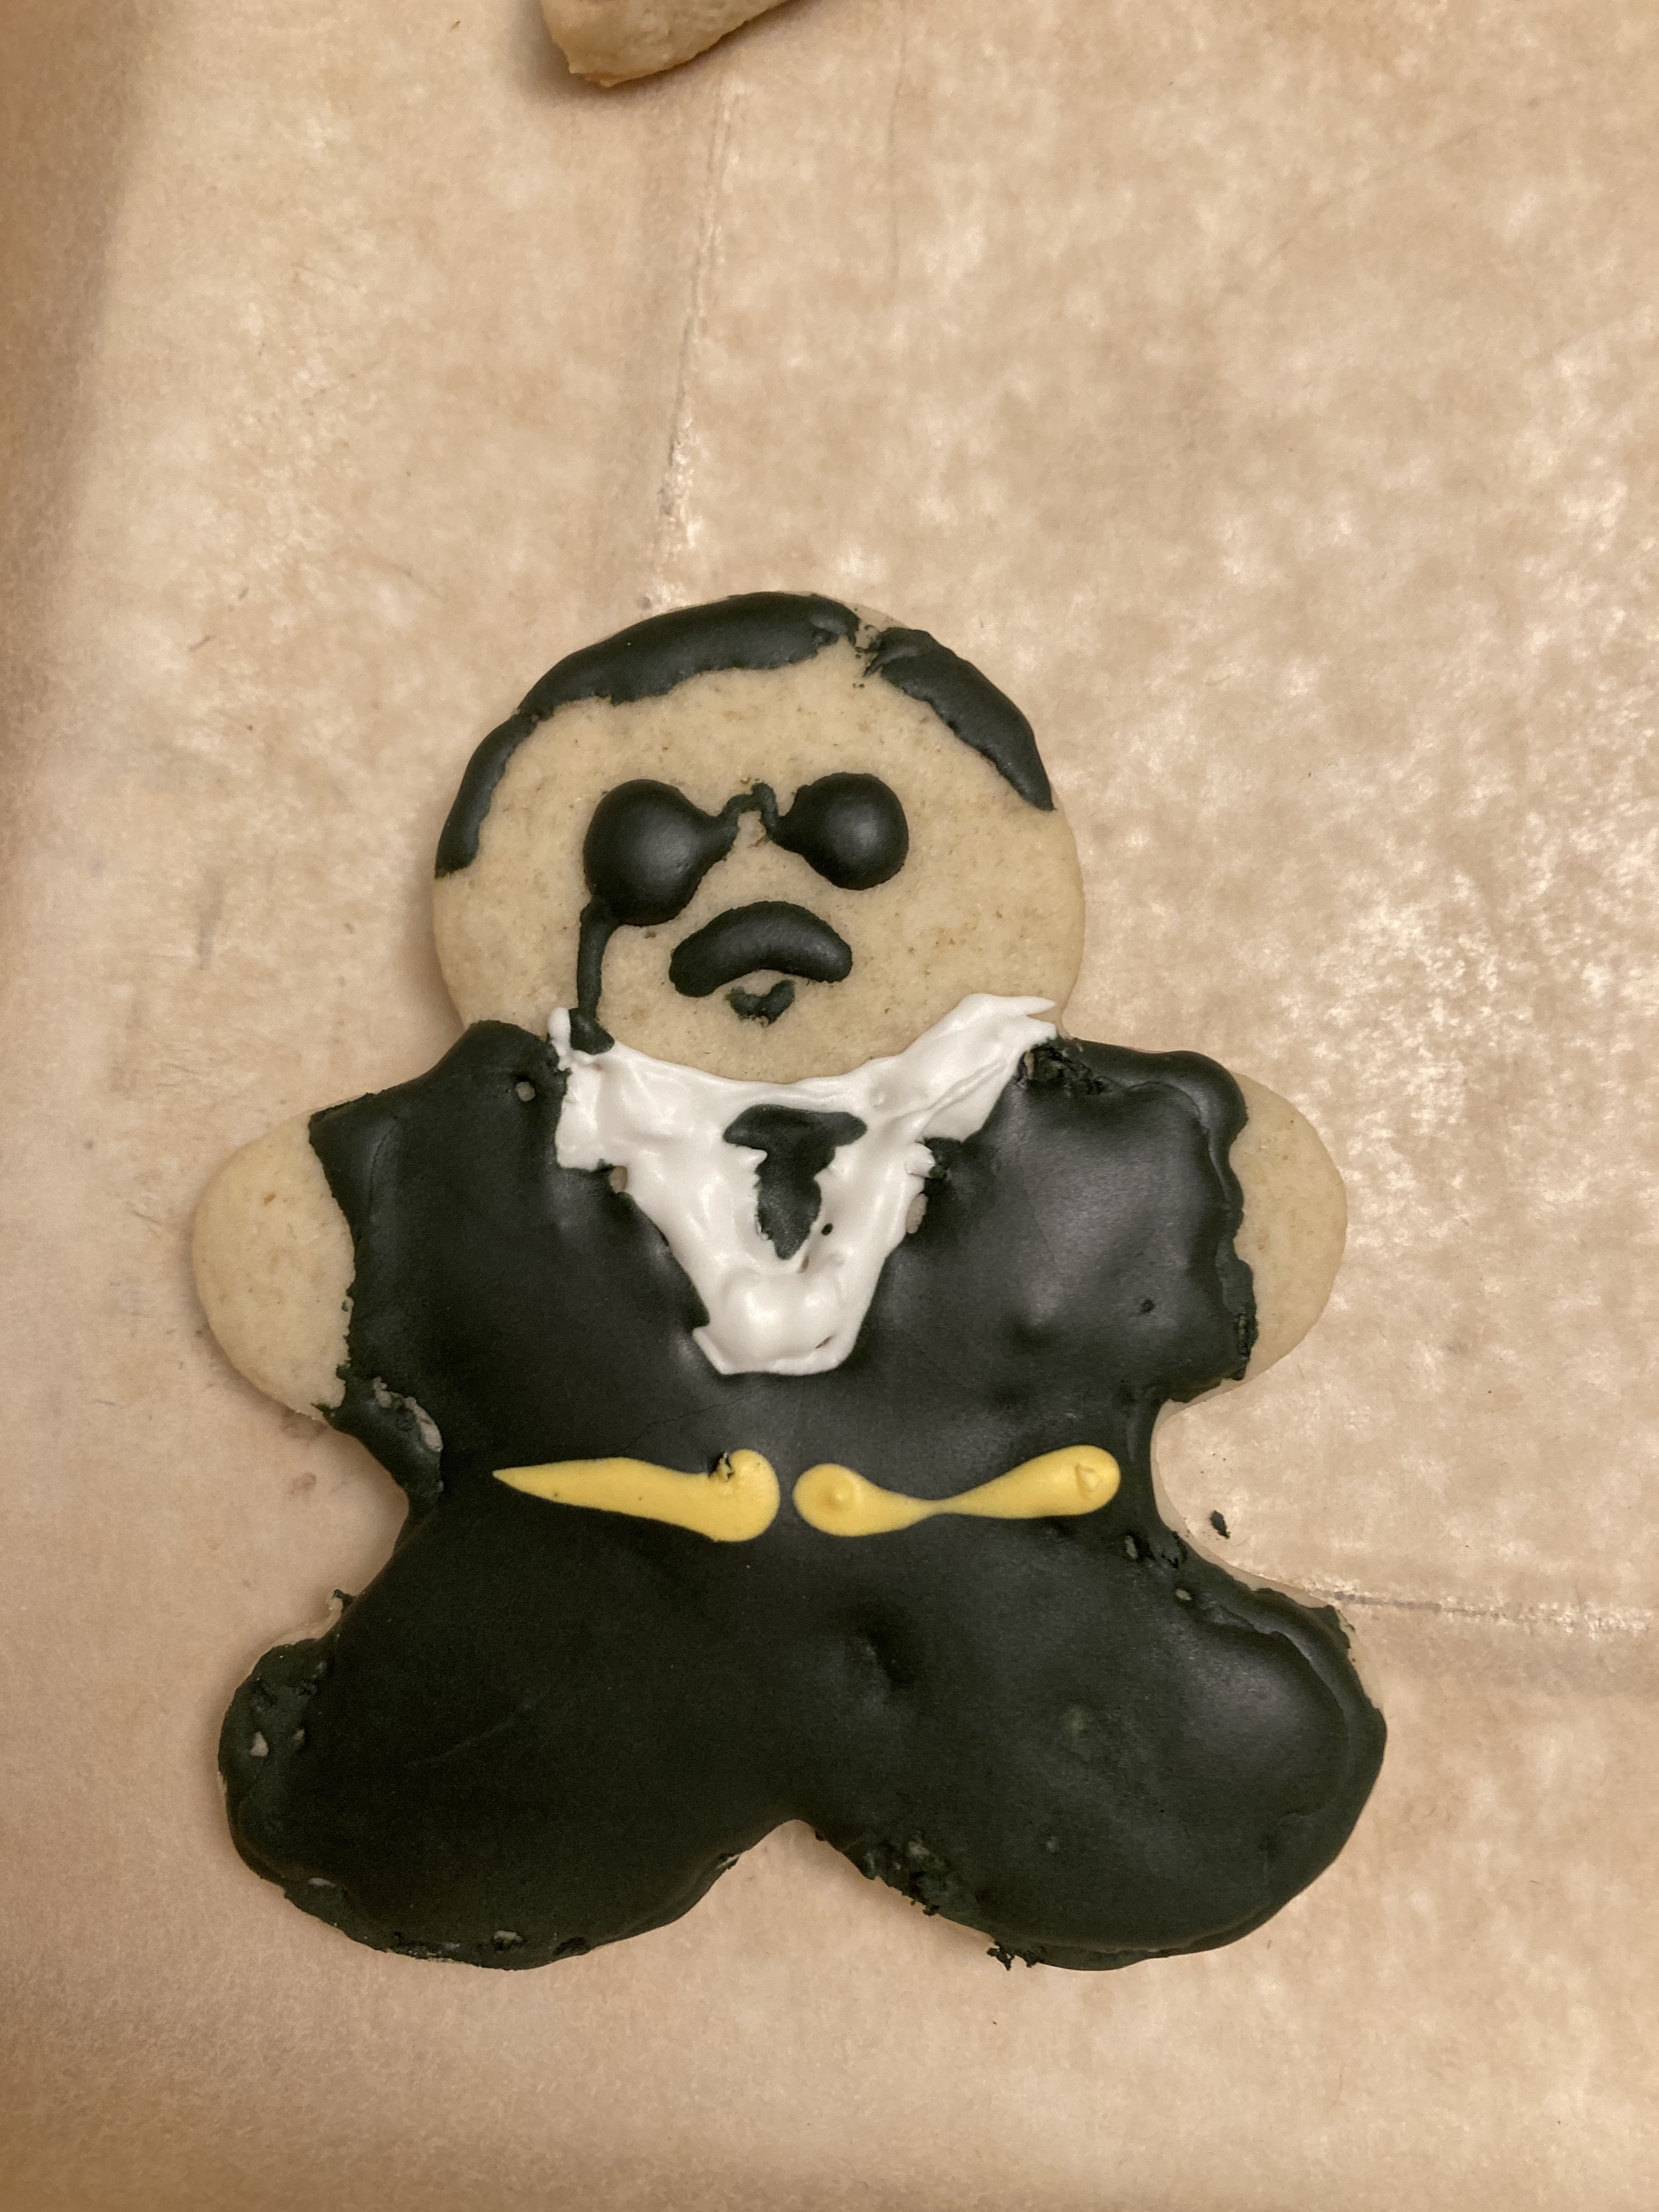 Theodore Roosevelt cookie